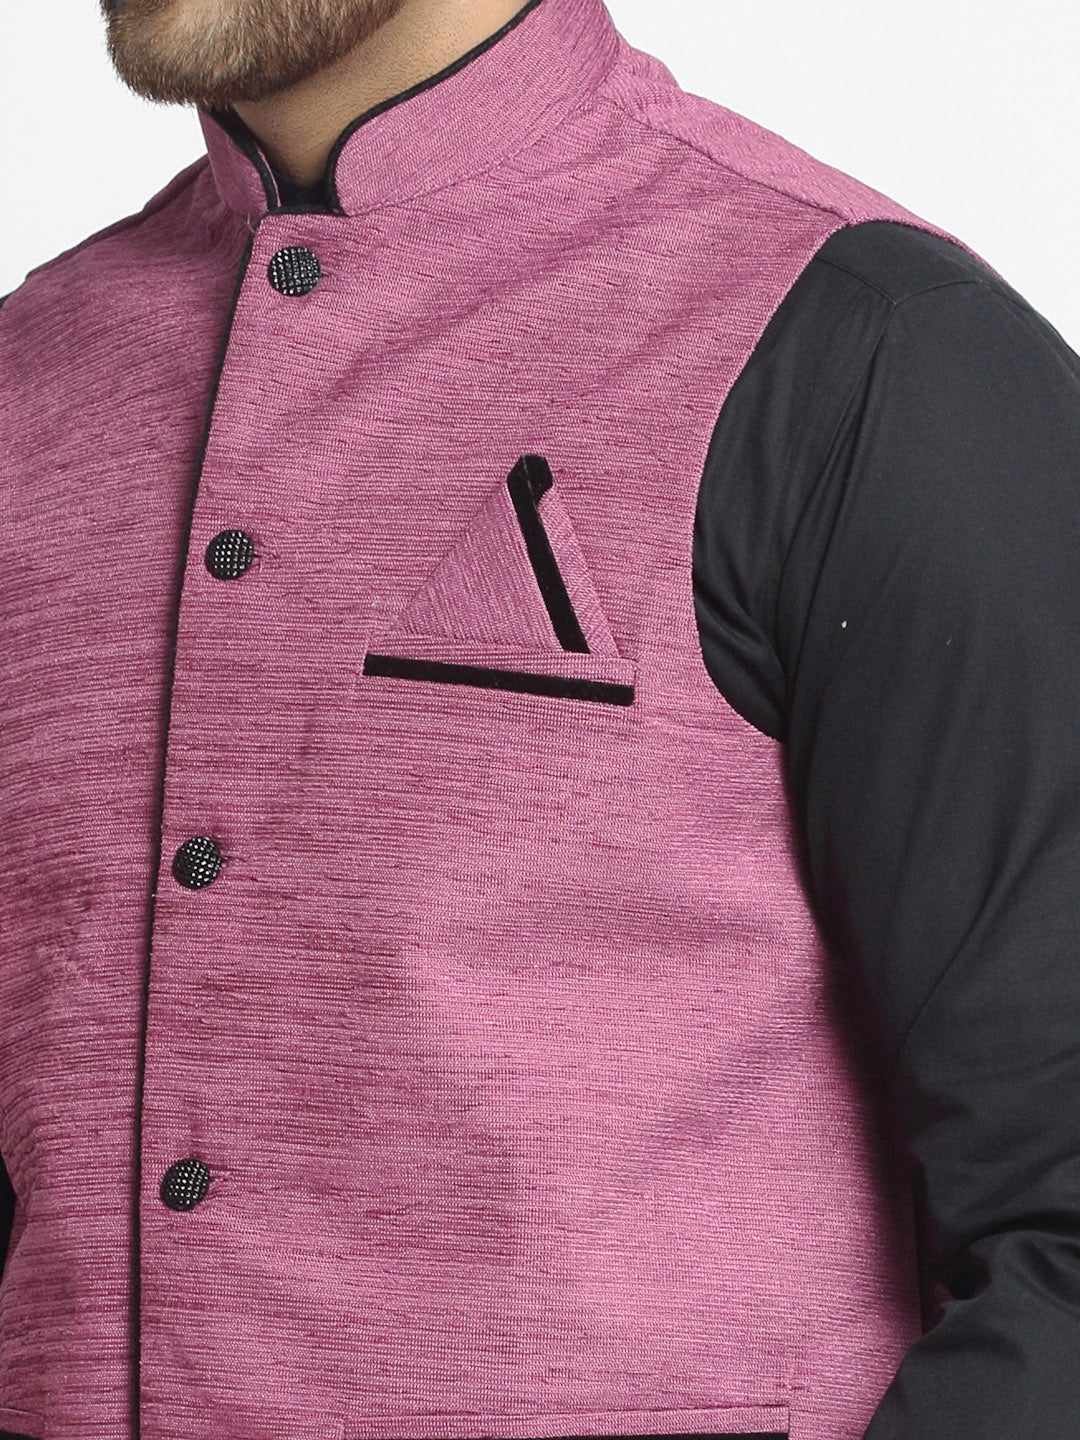 Jompers Men's Purple Solid Nehru Jacket with Square Pocket